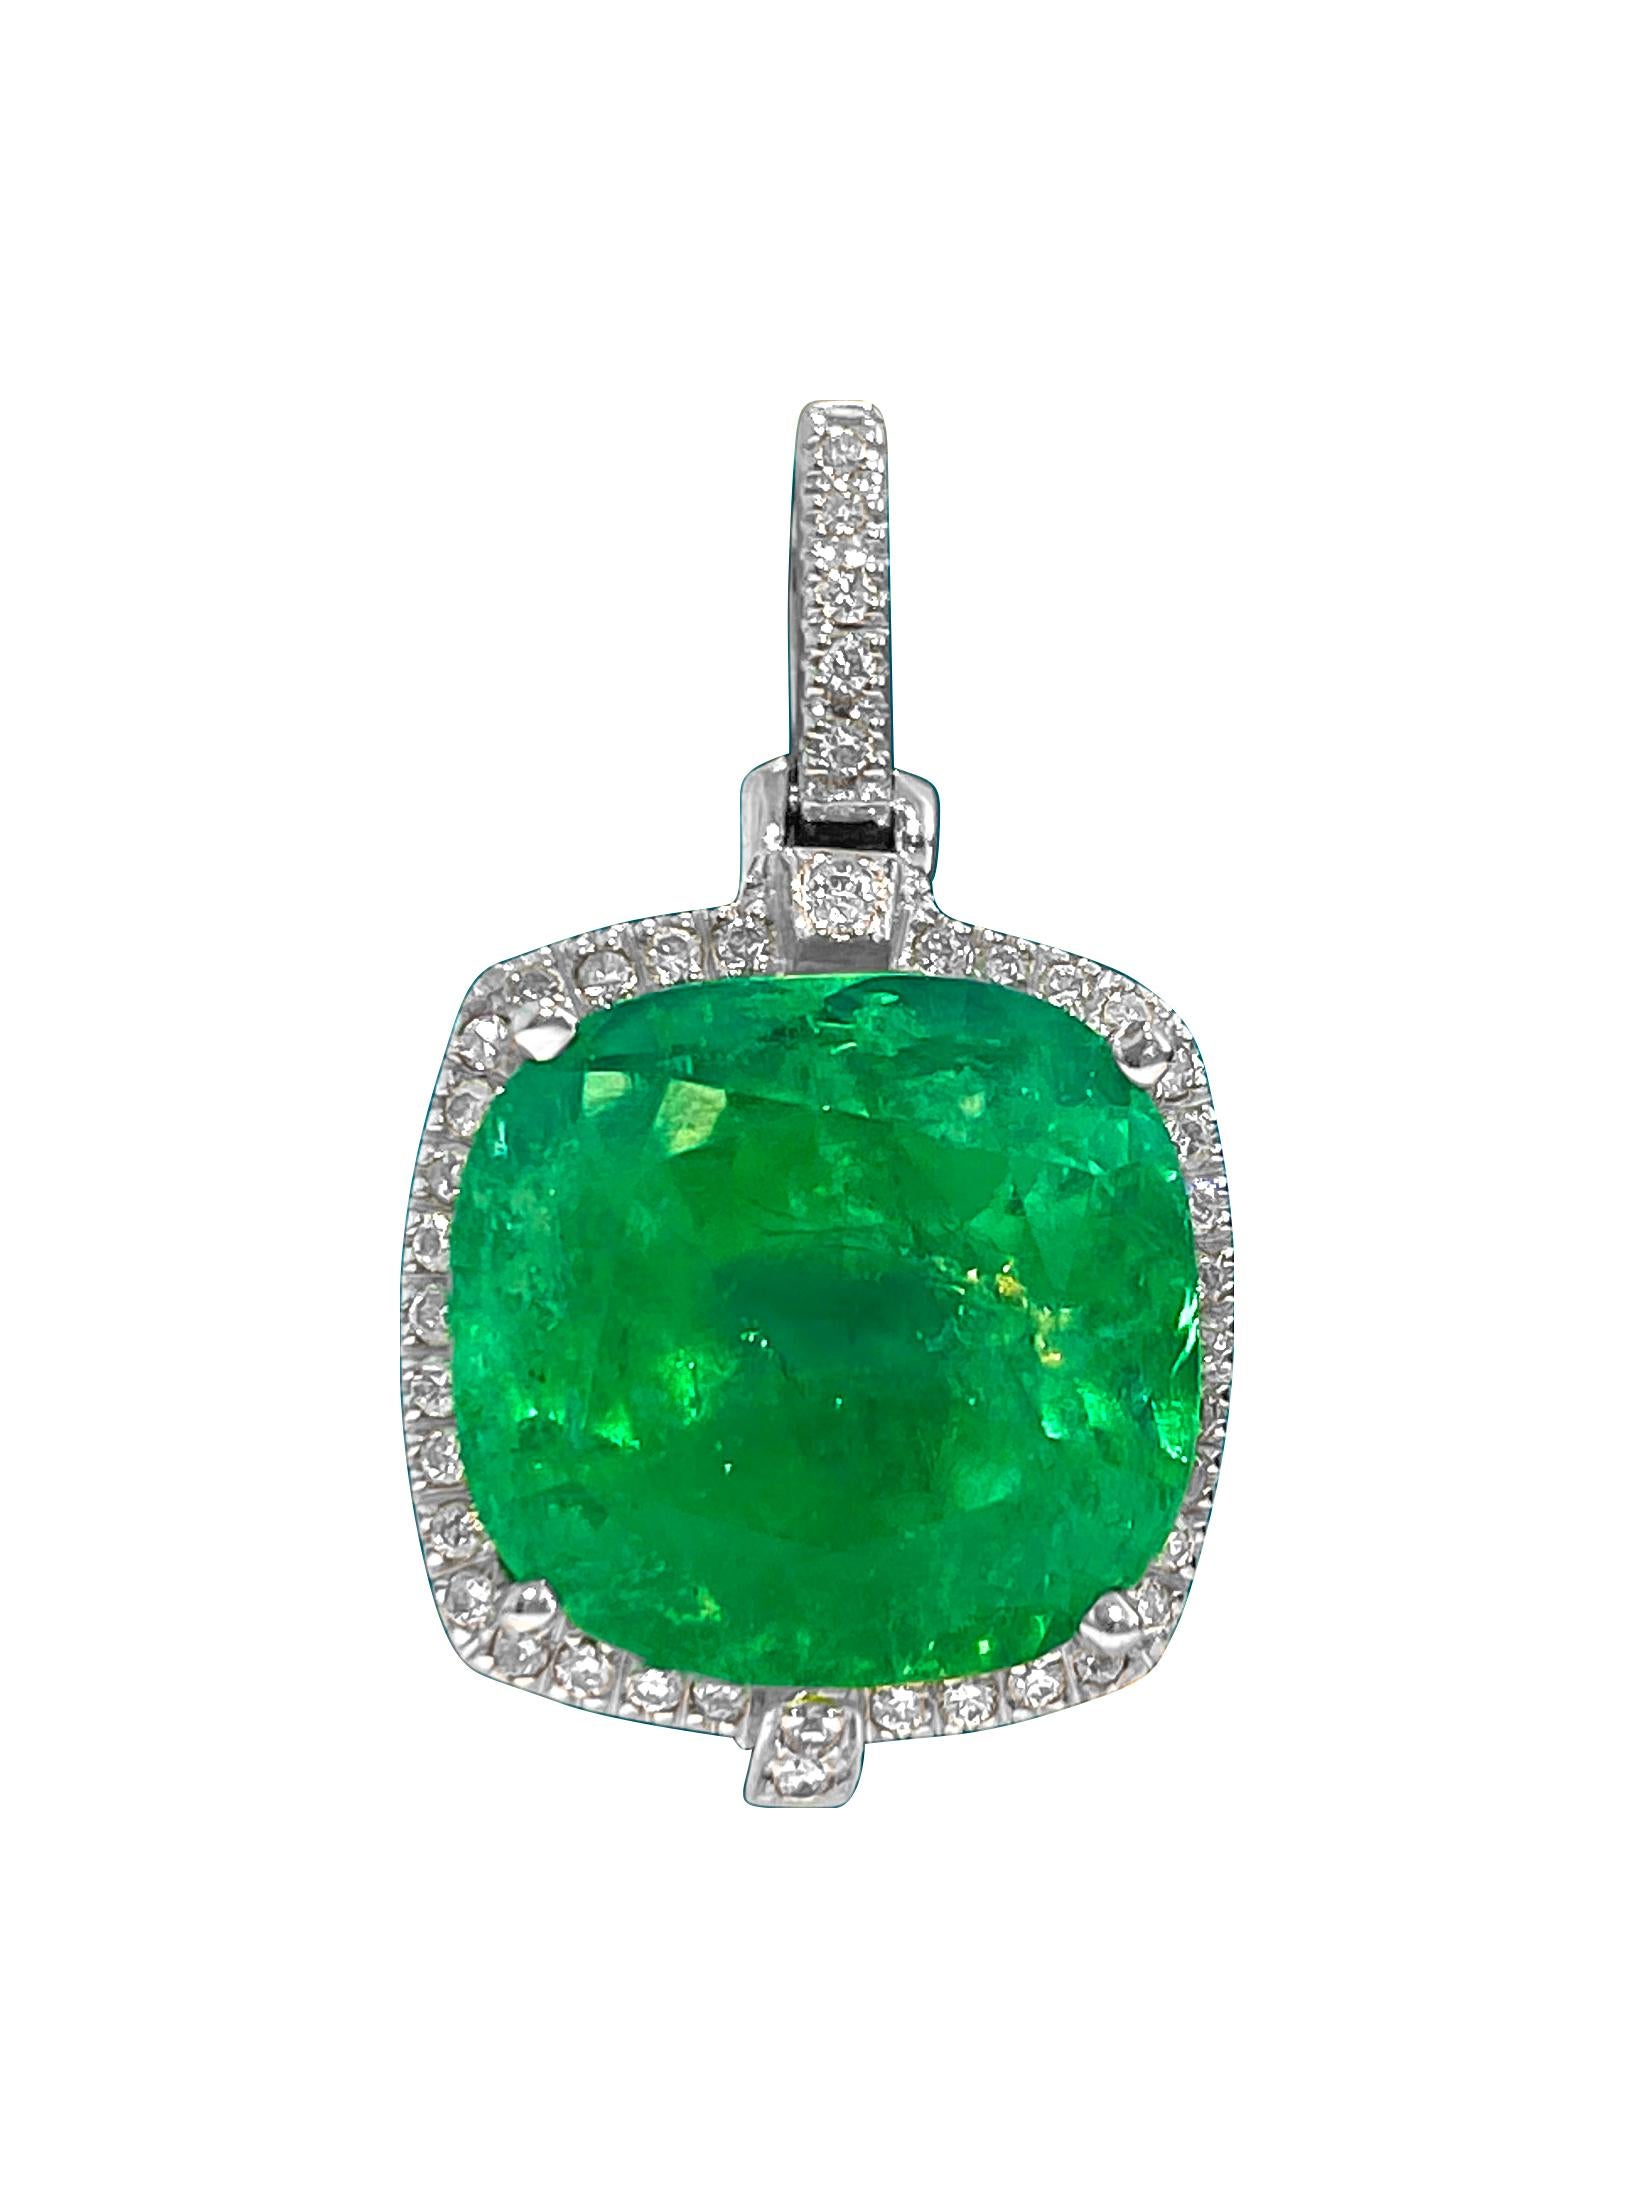 Cushion Cut 8.90 Carat Colombian Emerald and Diamond Pendant For Sale